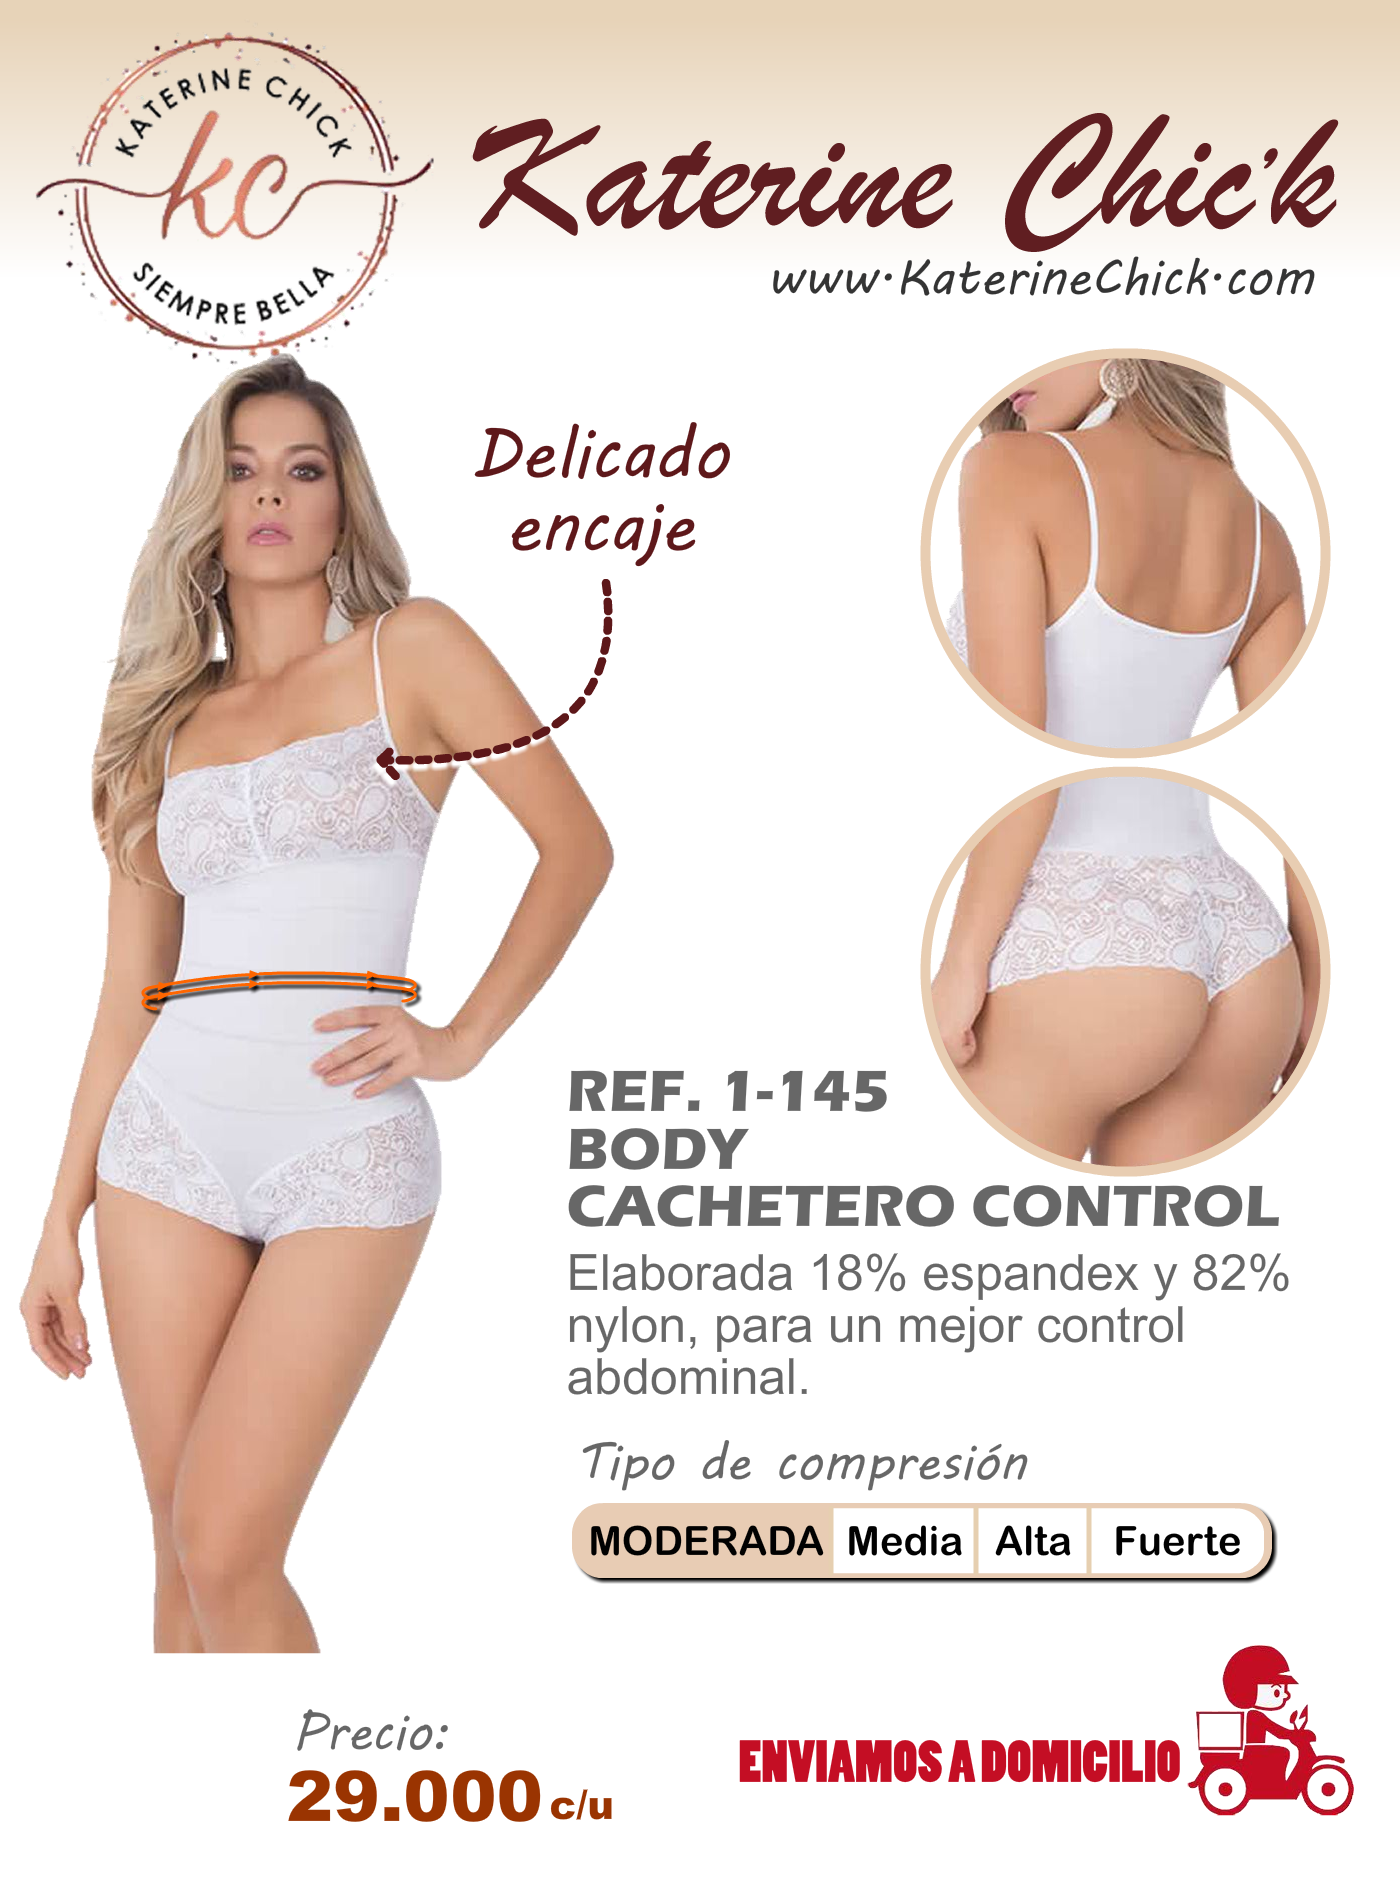 Body cachetero control Bucaramanga